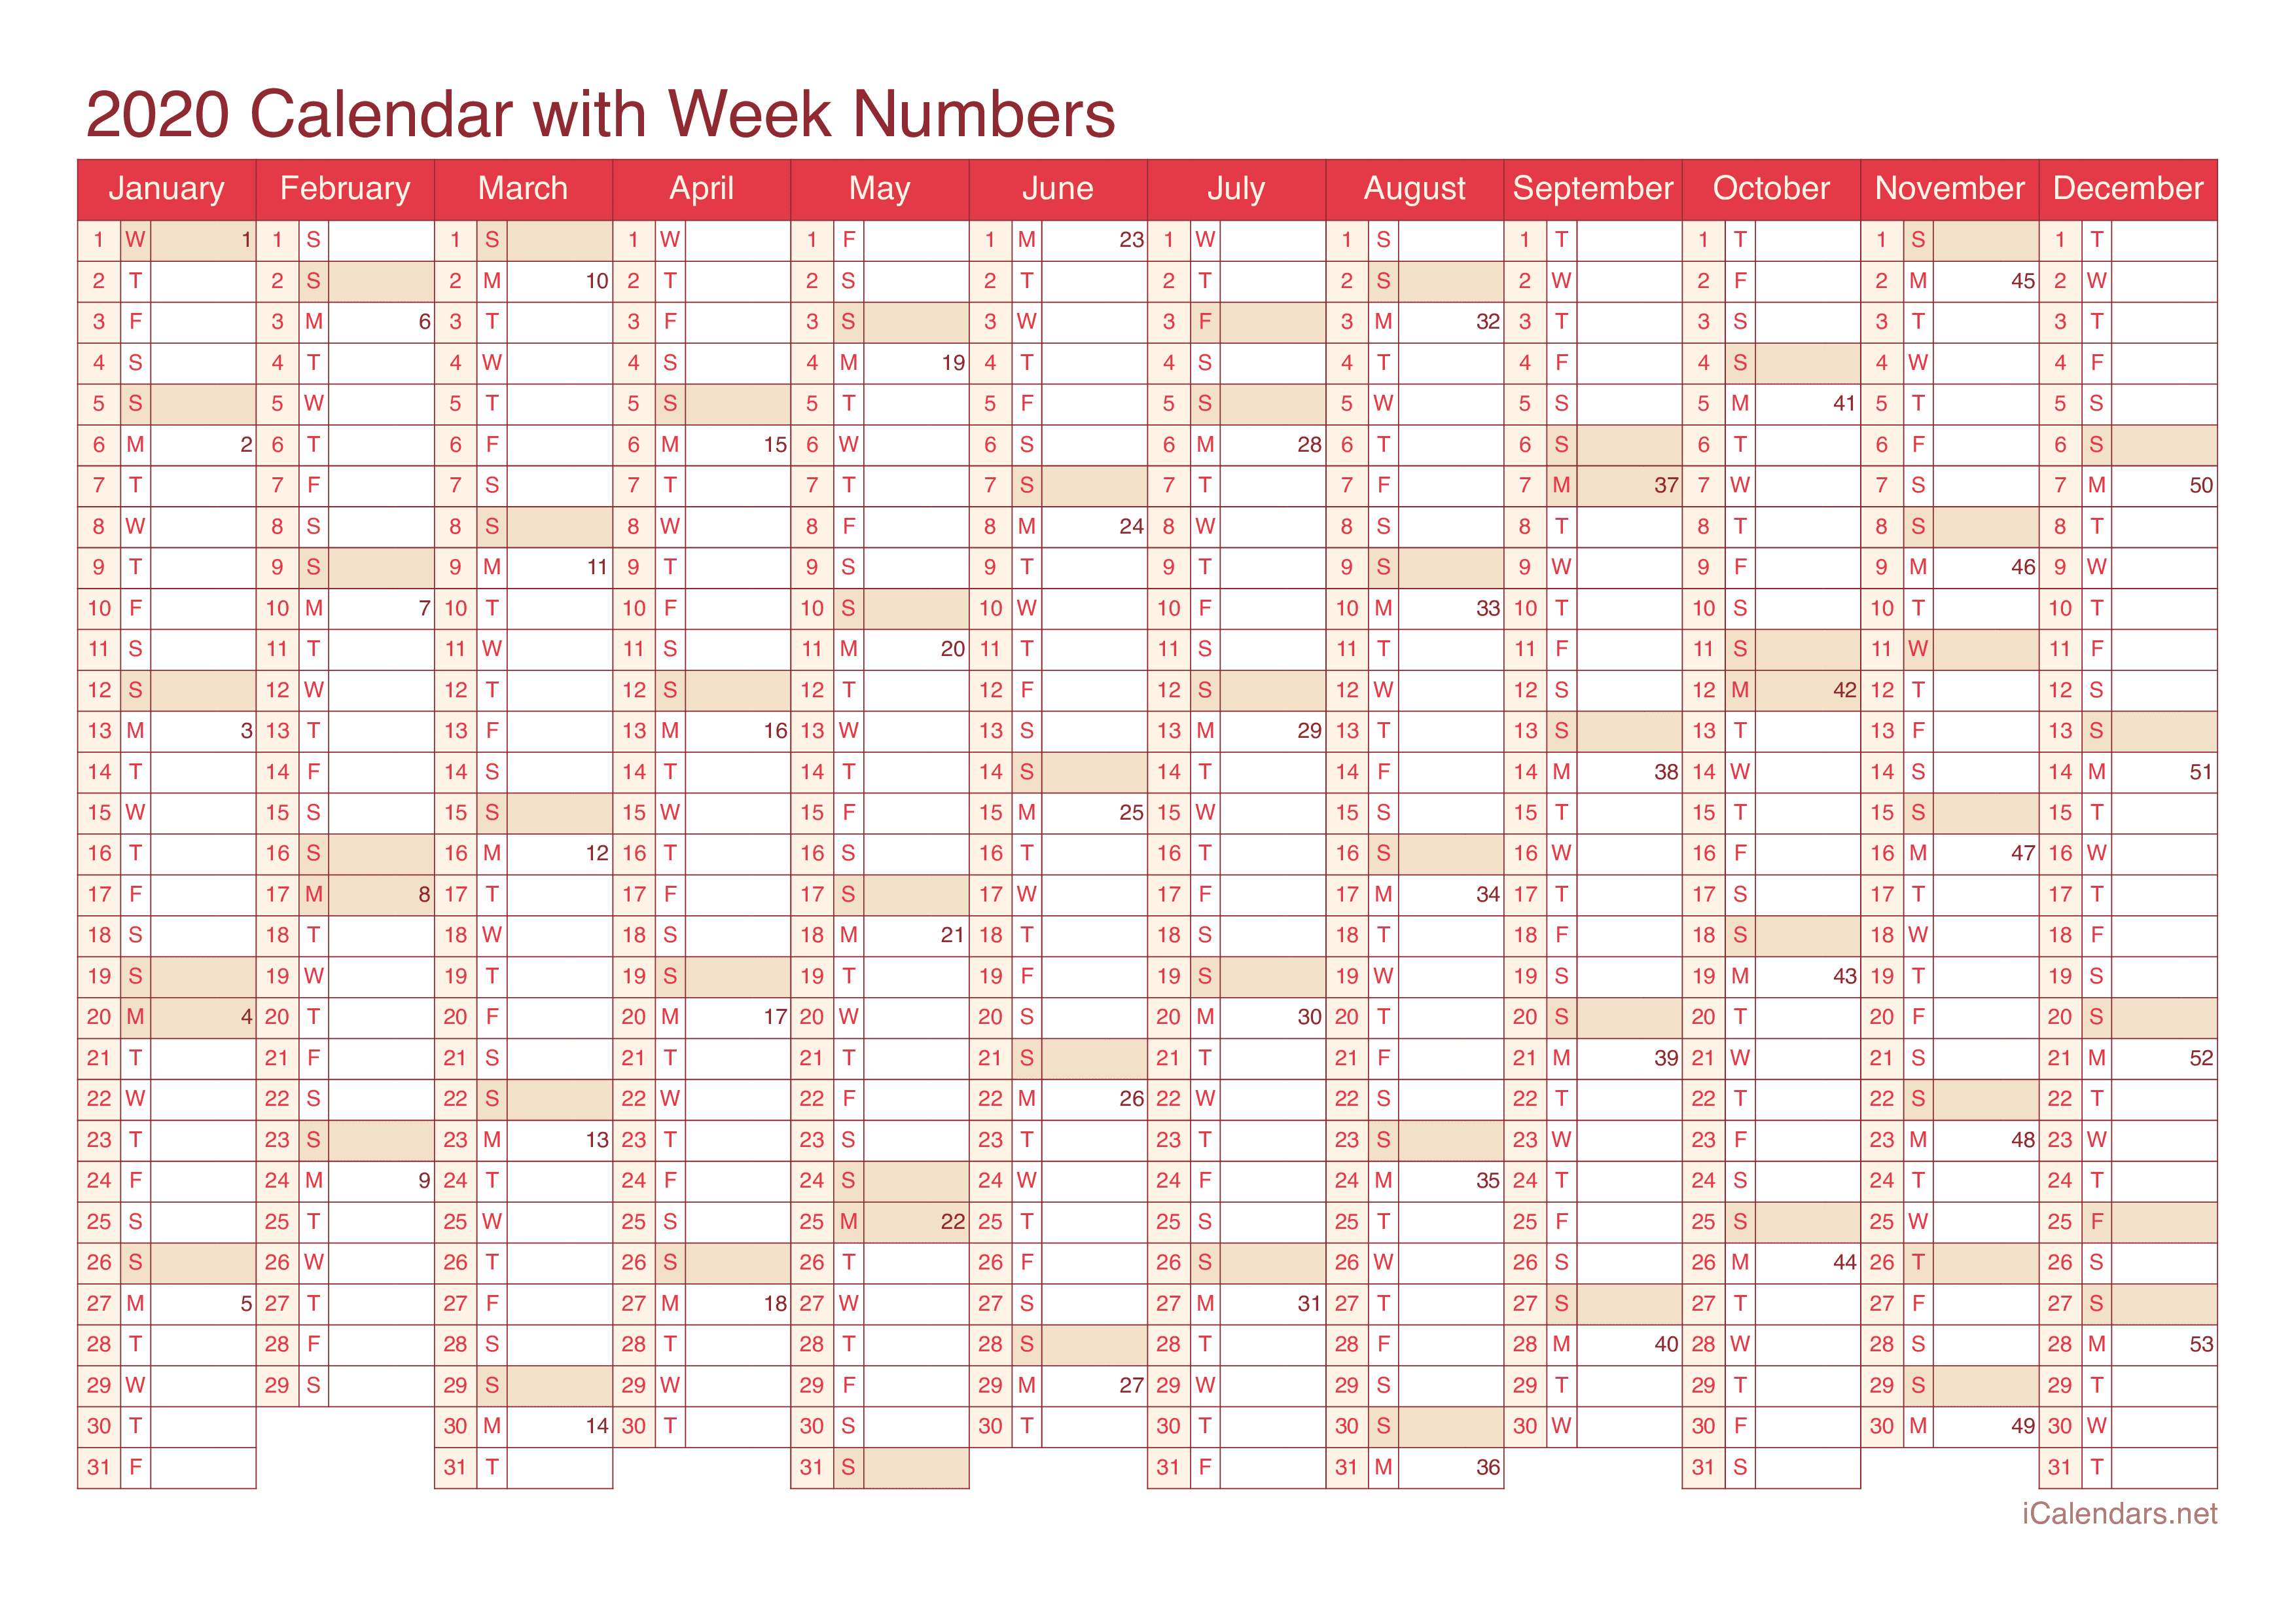 2020 Calendar with week numbers - Cherry